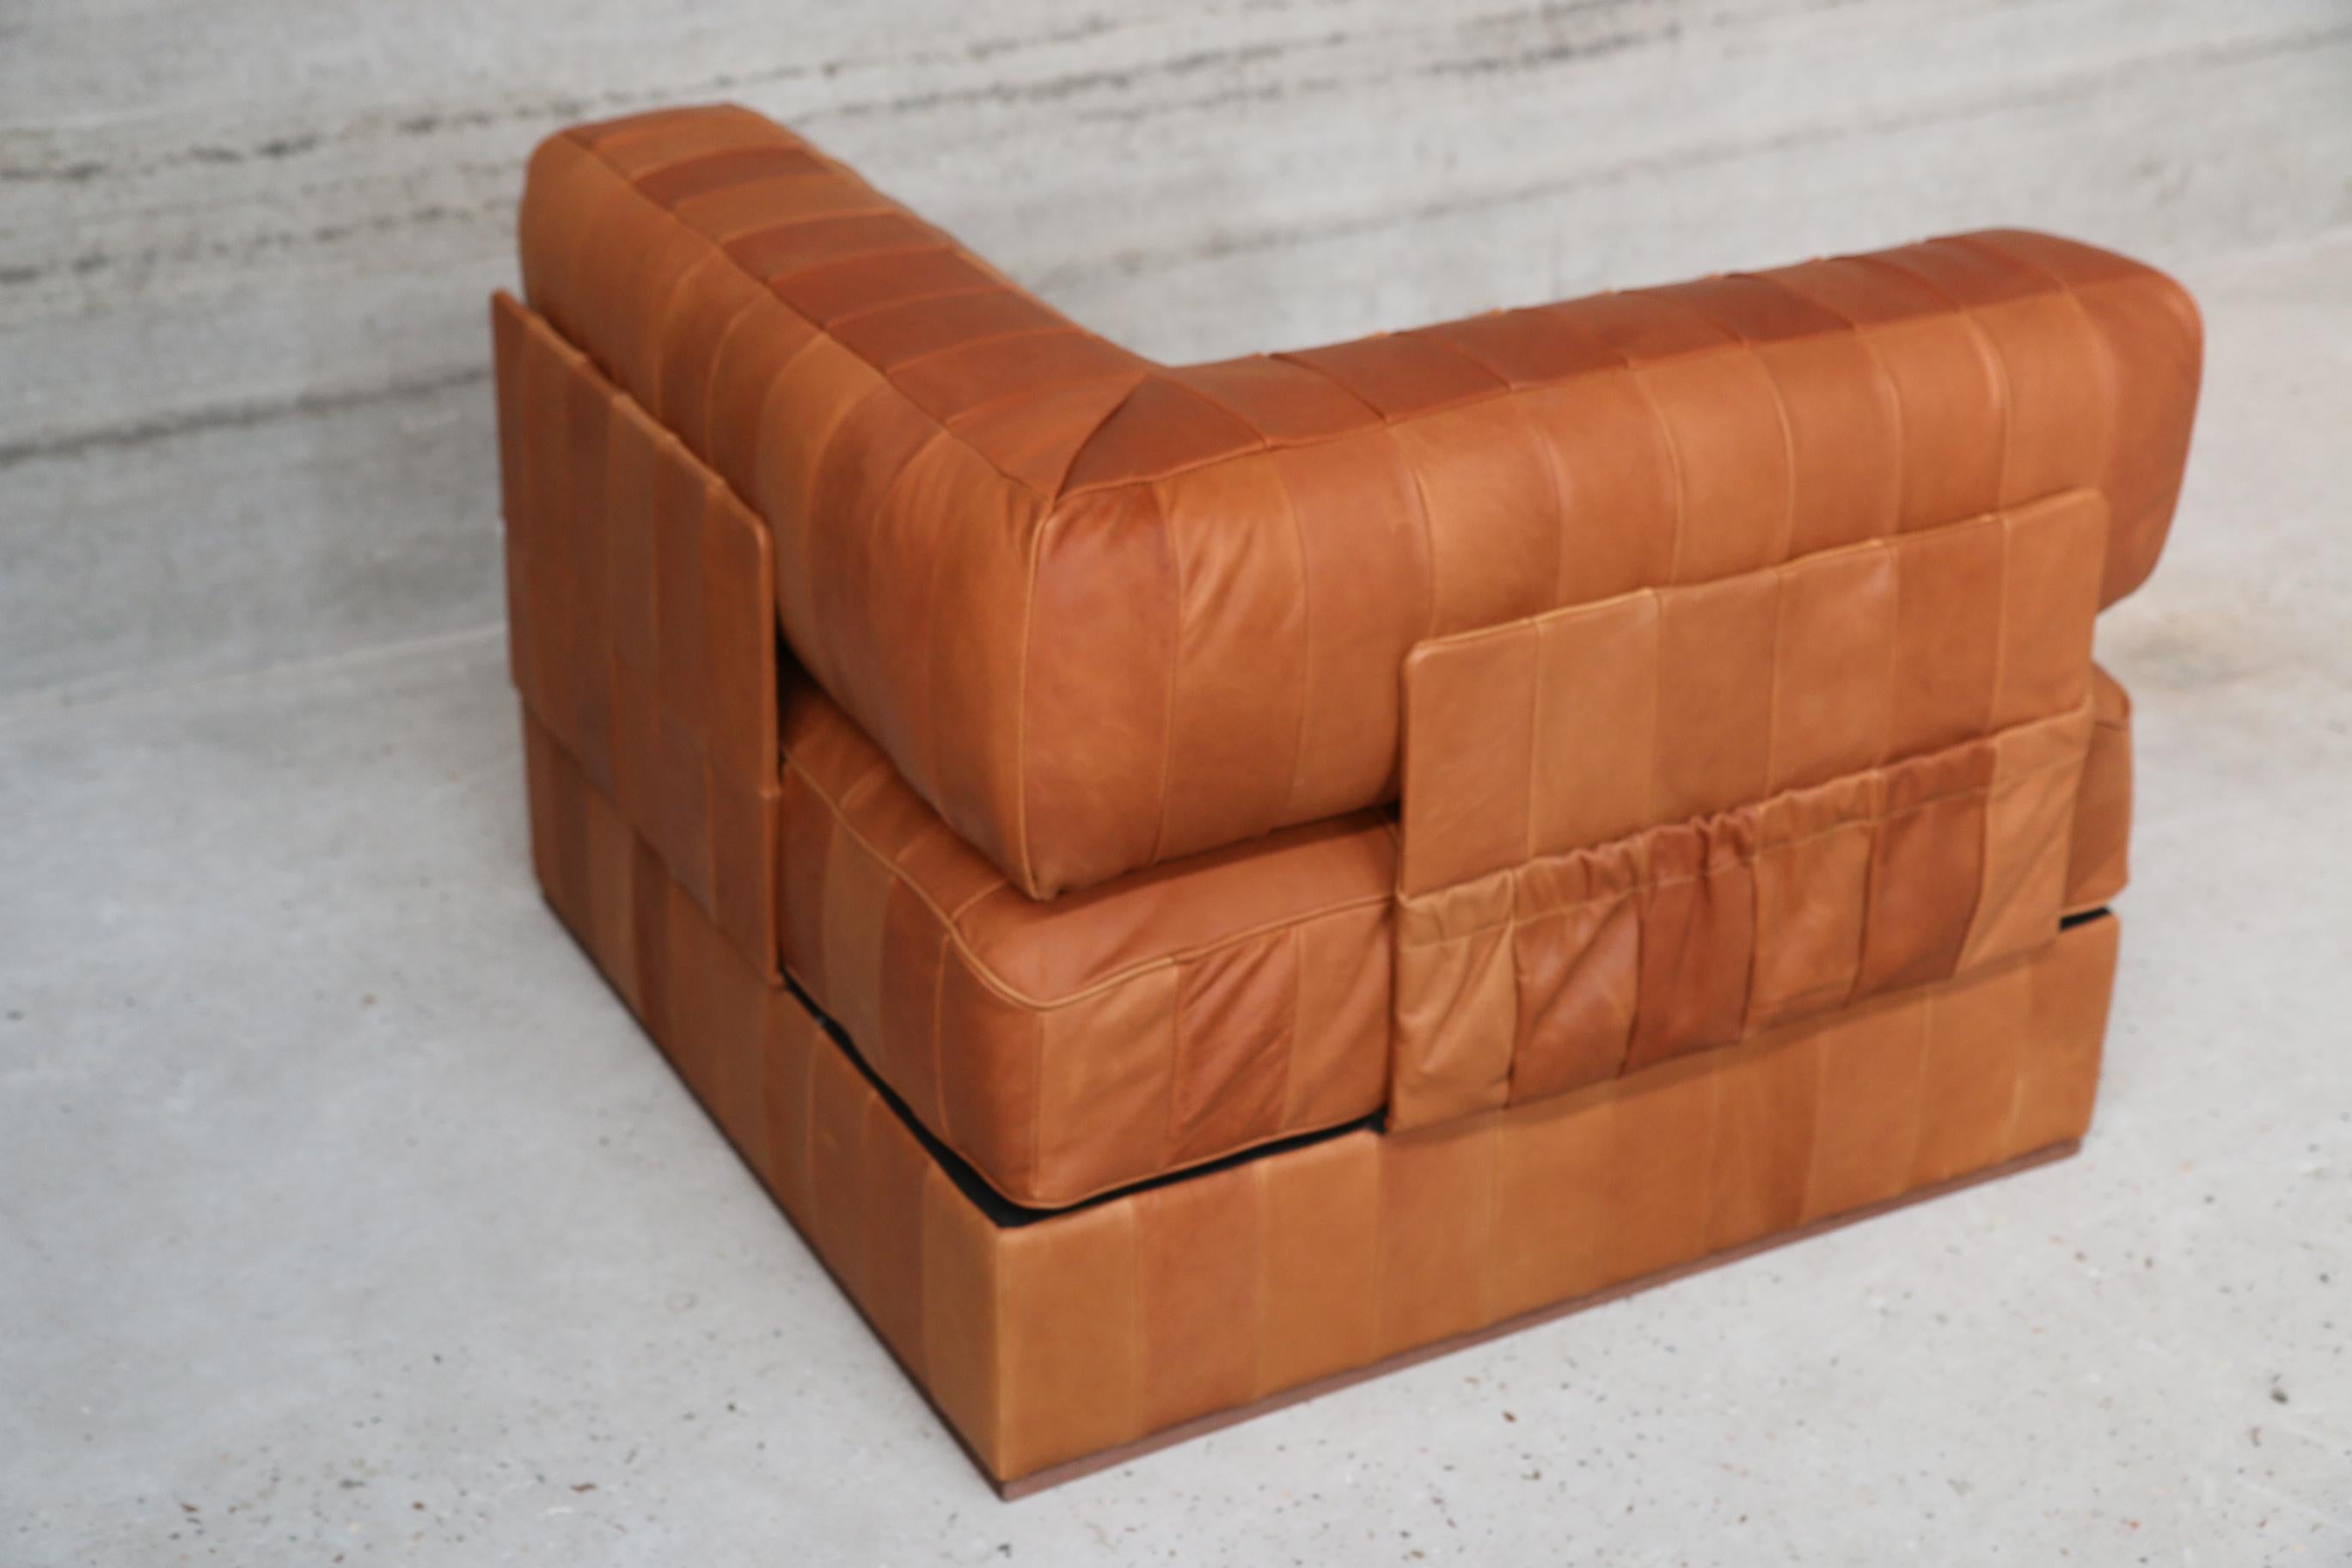 Rare Ds88 Cognac Leather Patchwork Love Seat De Sede Swiss For Sale 3